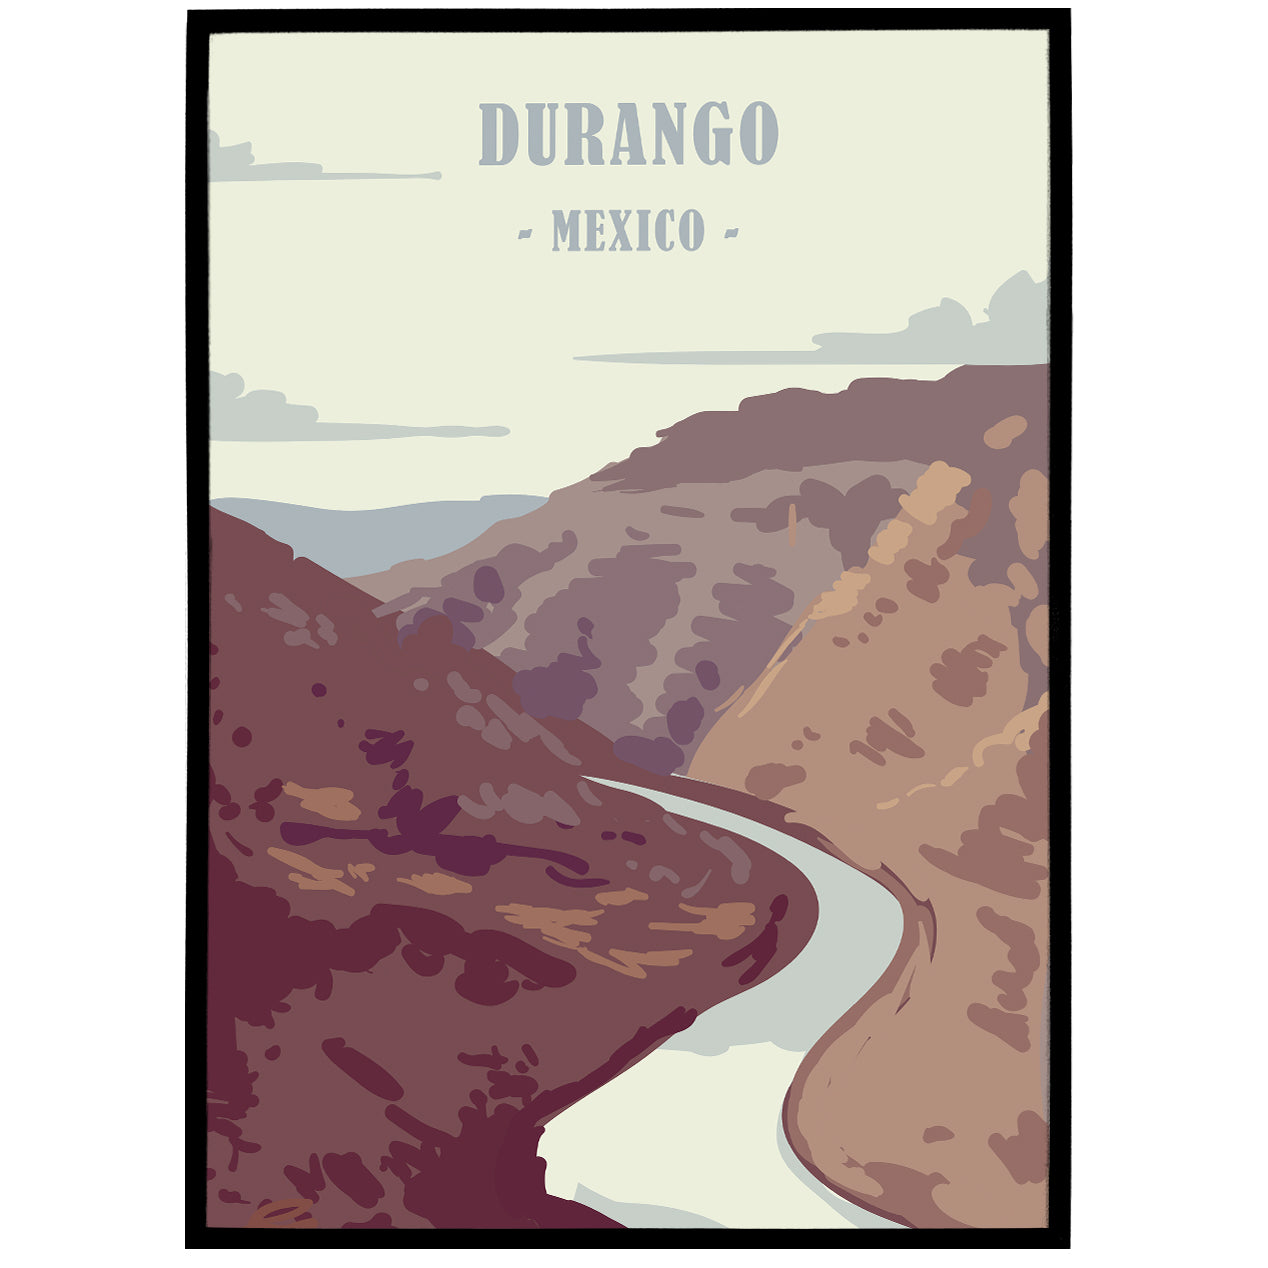 Durango - Mexico Travel Poster